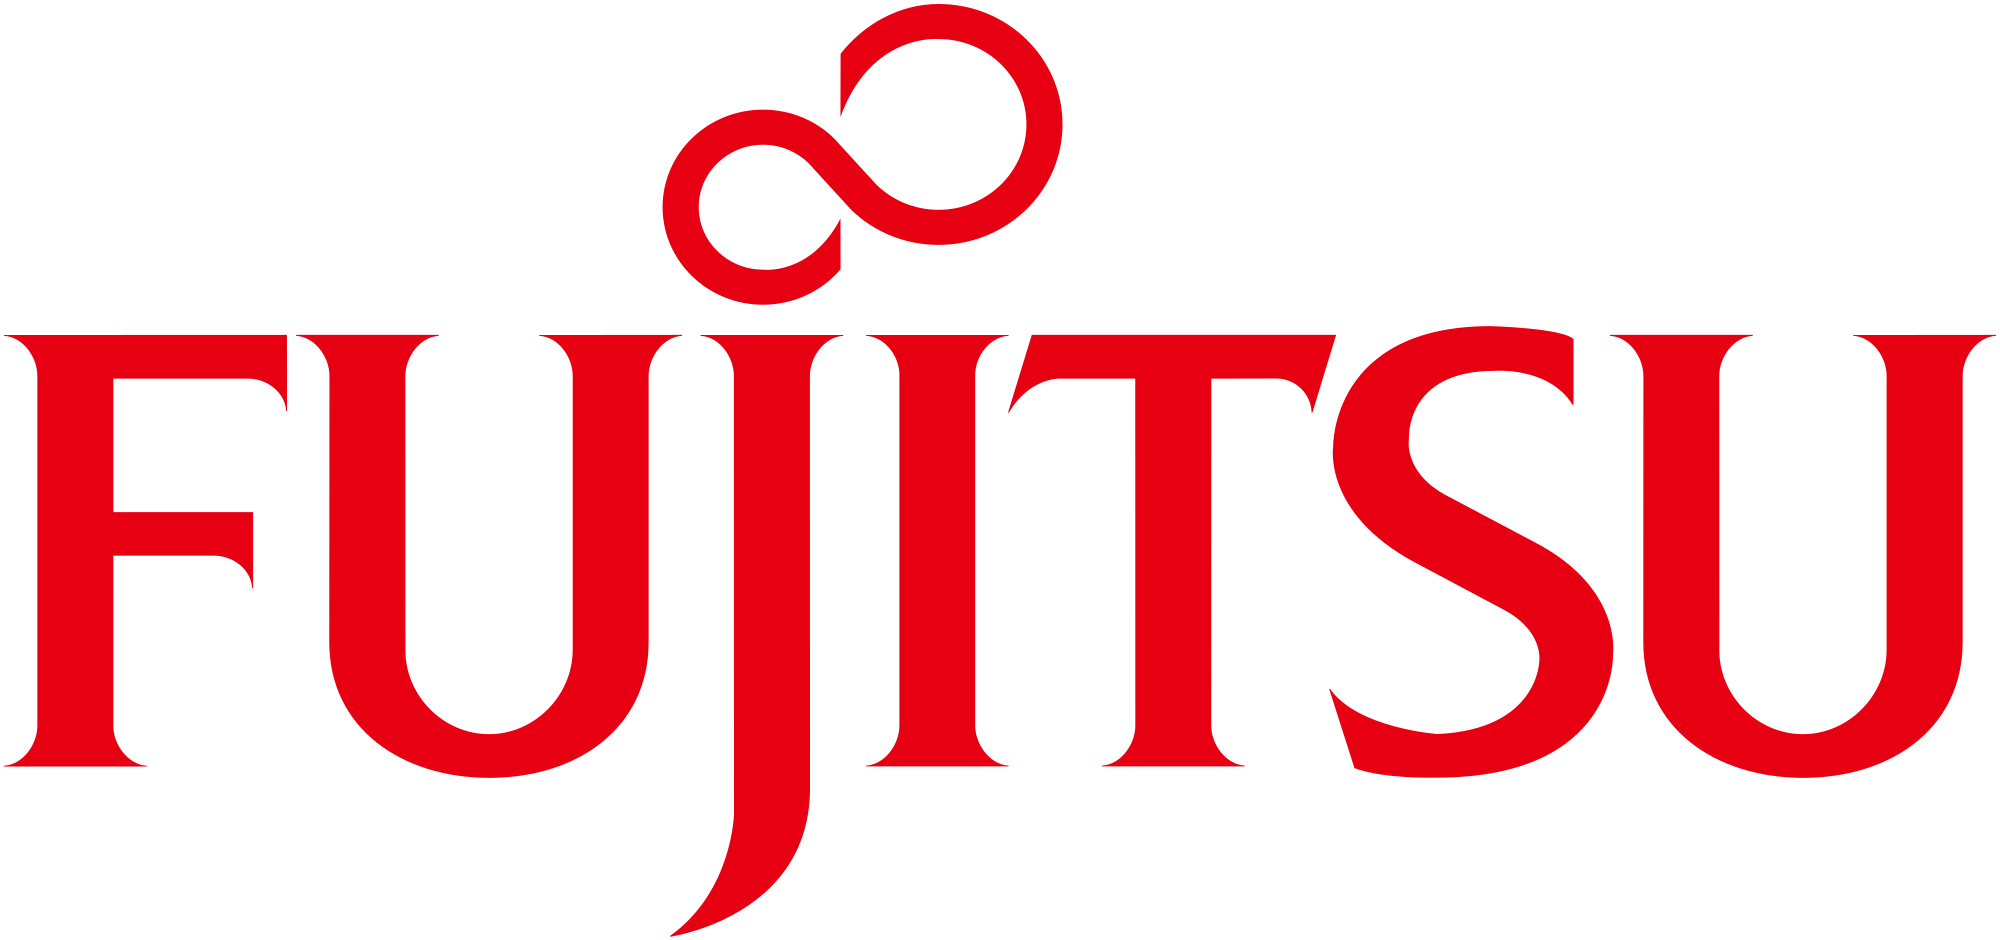 Fujitsu Technology Solutions